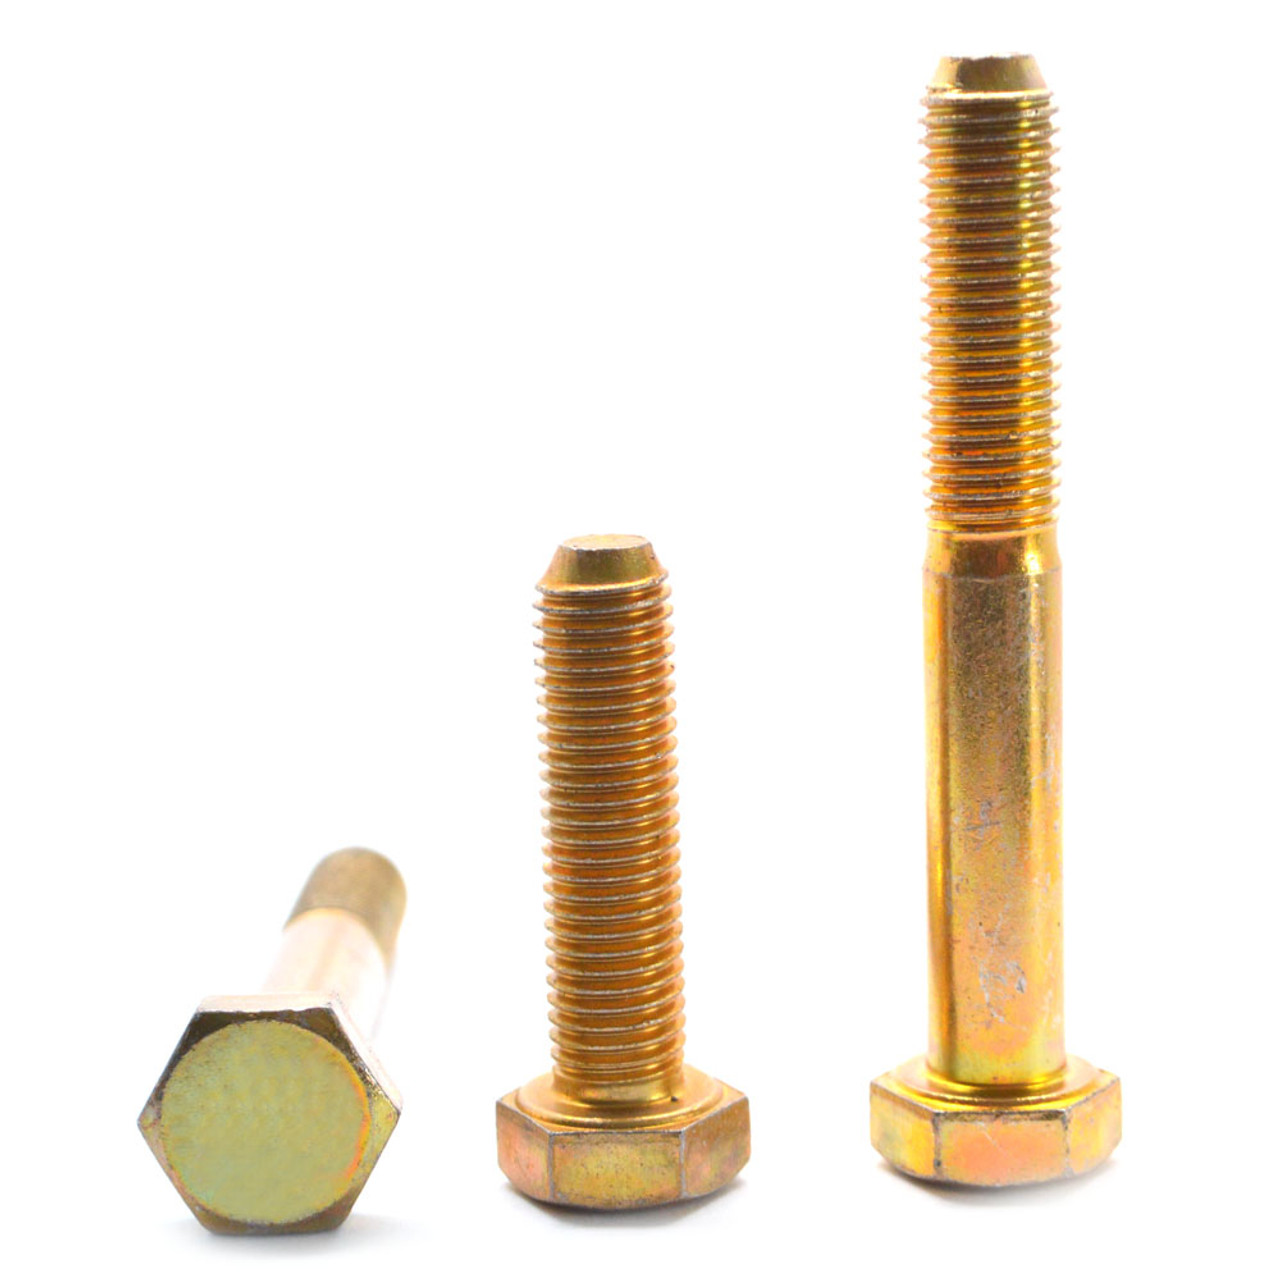 M10 x 1.50 x 110 MM (PT) Coarse Thread DIN 931 Class 10.9 Hex Cap Screw (Bolt) Alloy Steel Yellow Zinc Plated